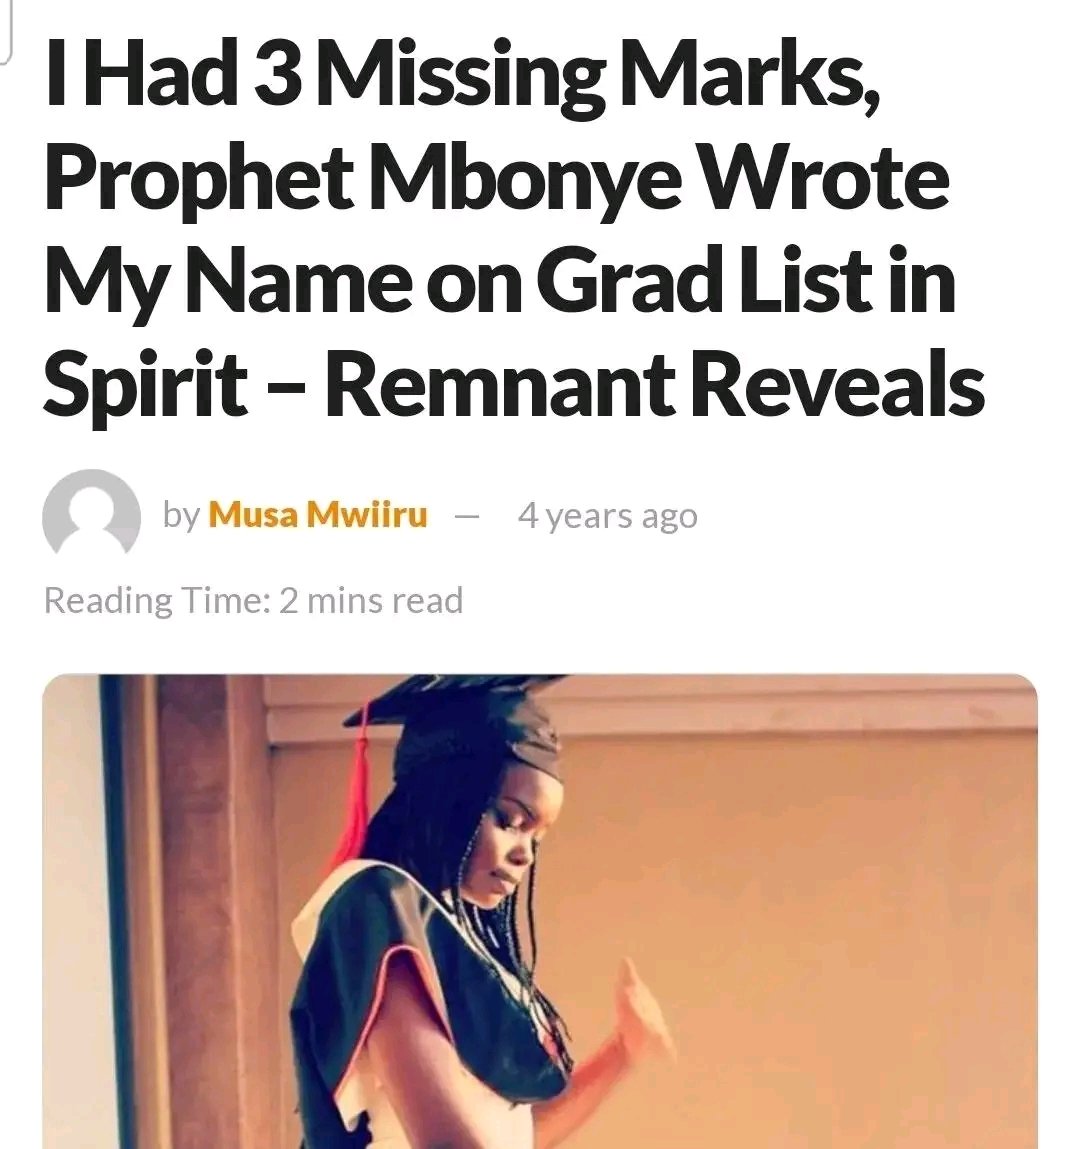 Testimony Segment:

I had 3 missing marks, Prophet Mbonye wrote my name on Grad list in Spirit - Remnant reveals

#ProphetElvisMbonye